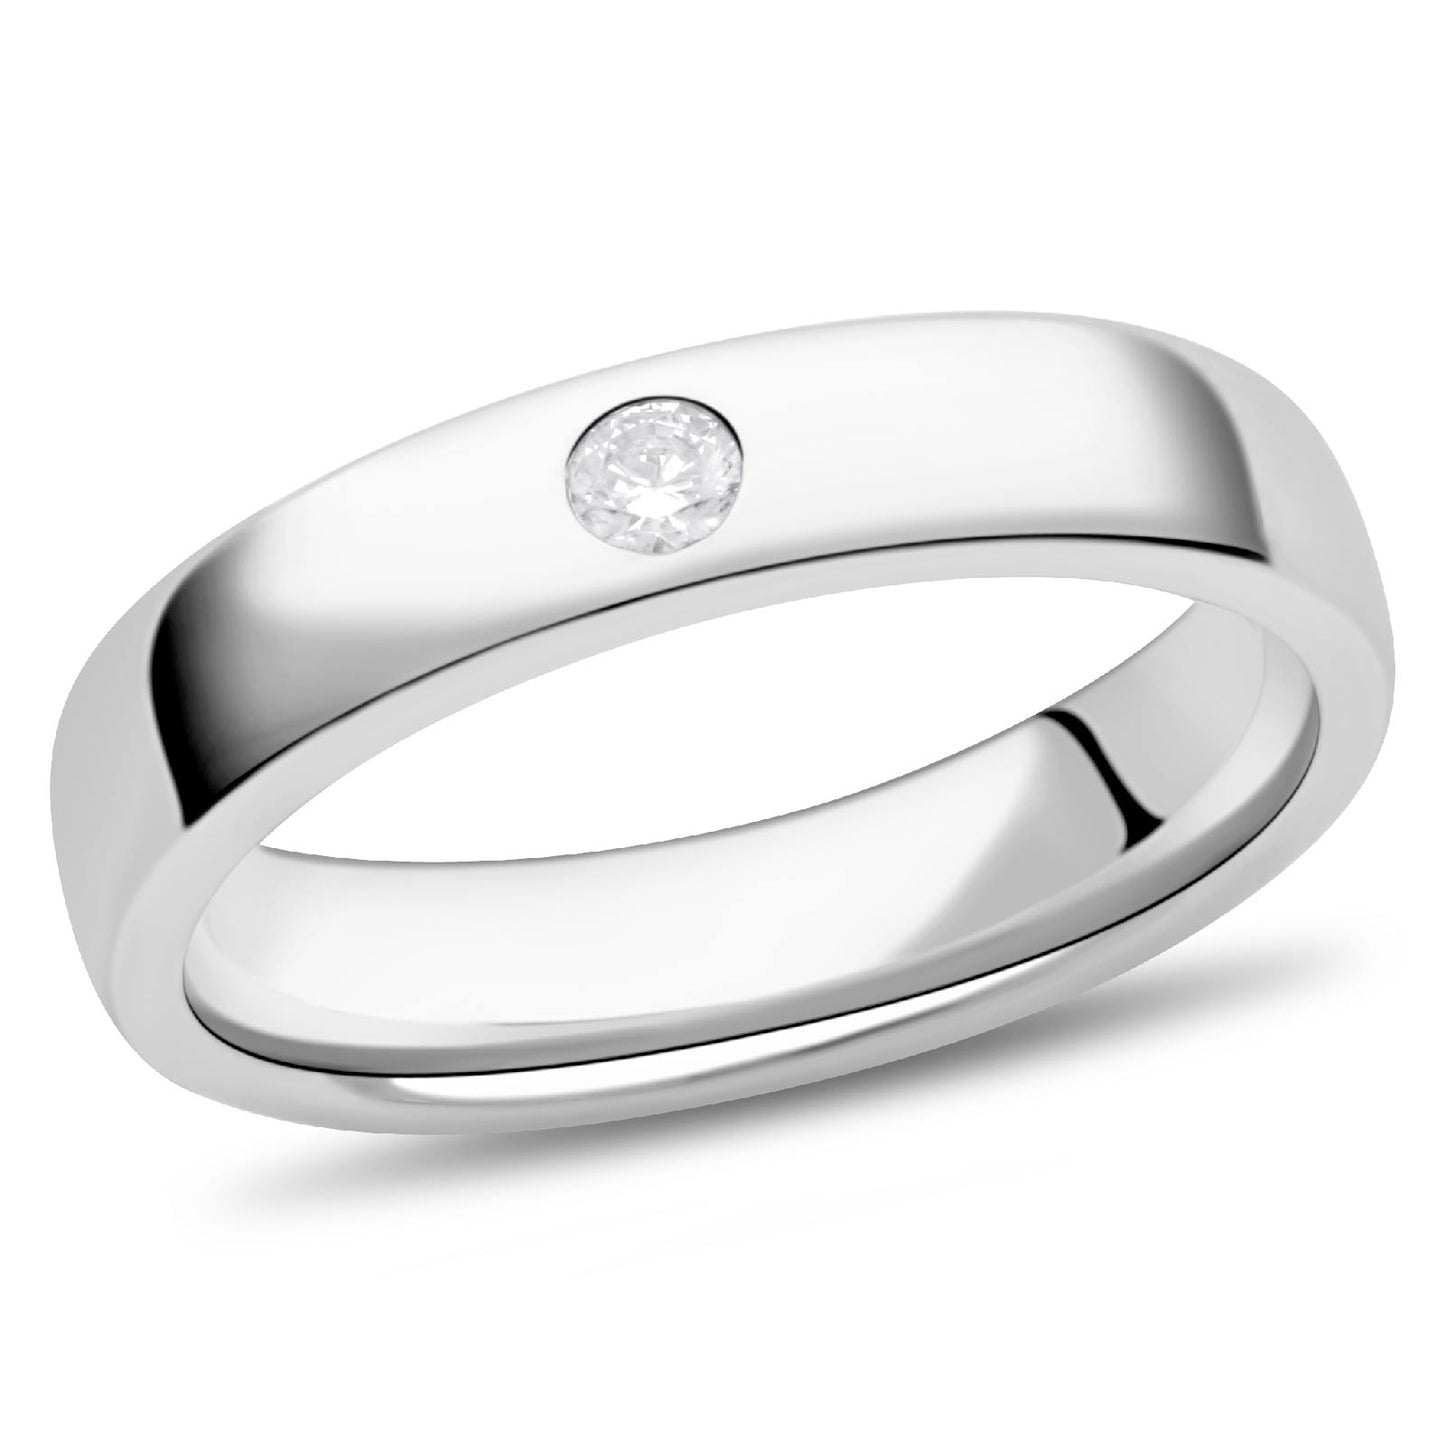 Ring 5mm Zirkonia Weiß 925 Silber Massiv